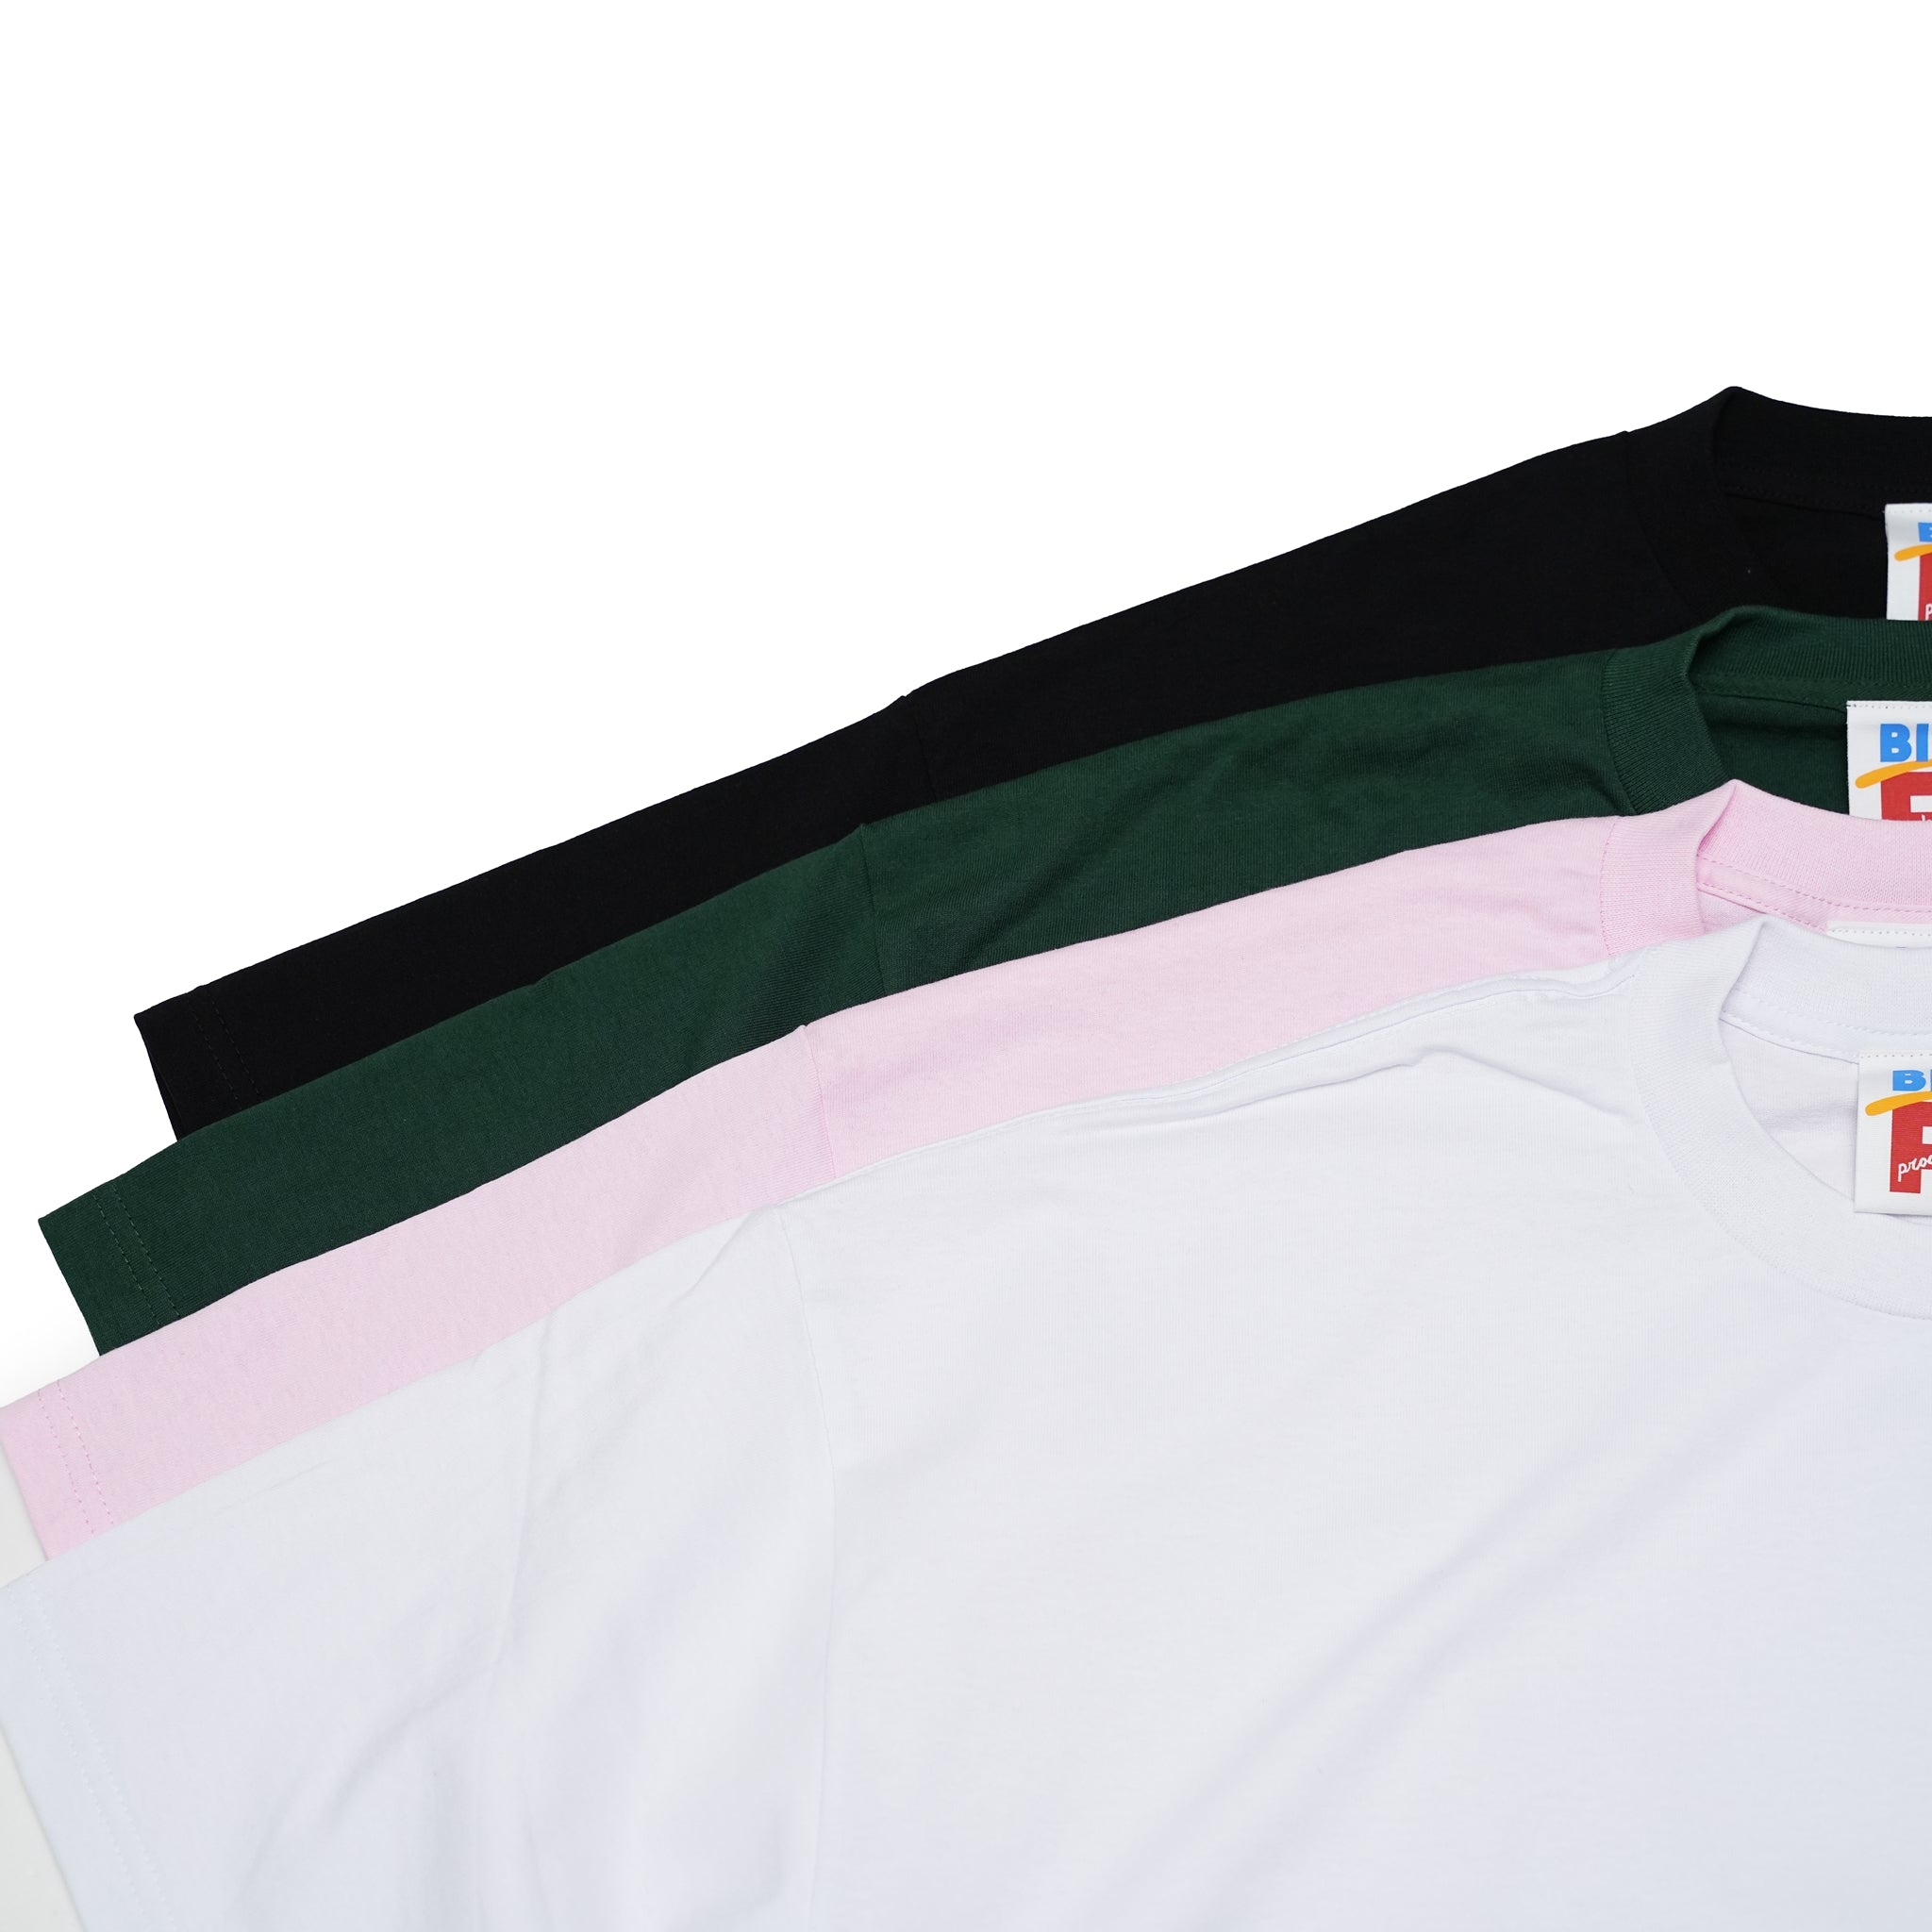 No:#SV041 | Name:Big P Short Length Tee | Color:White/Black/Green/Pink | Size:Free【Big P Product】【ネコポス選択可能】